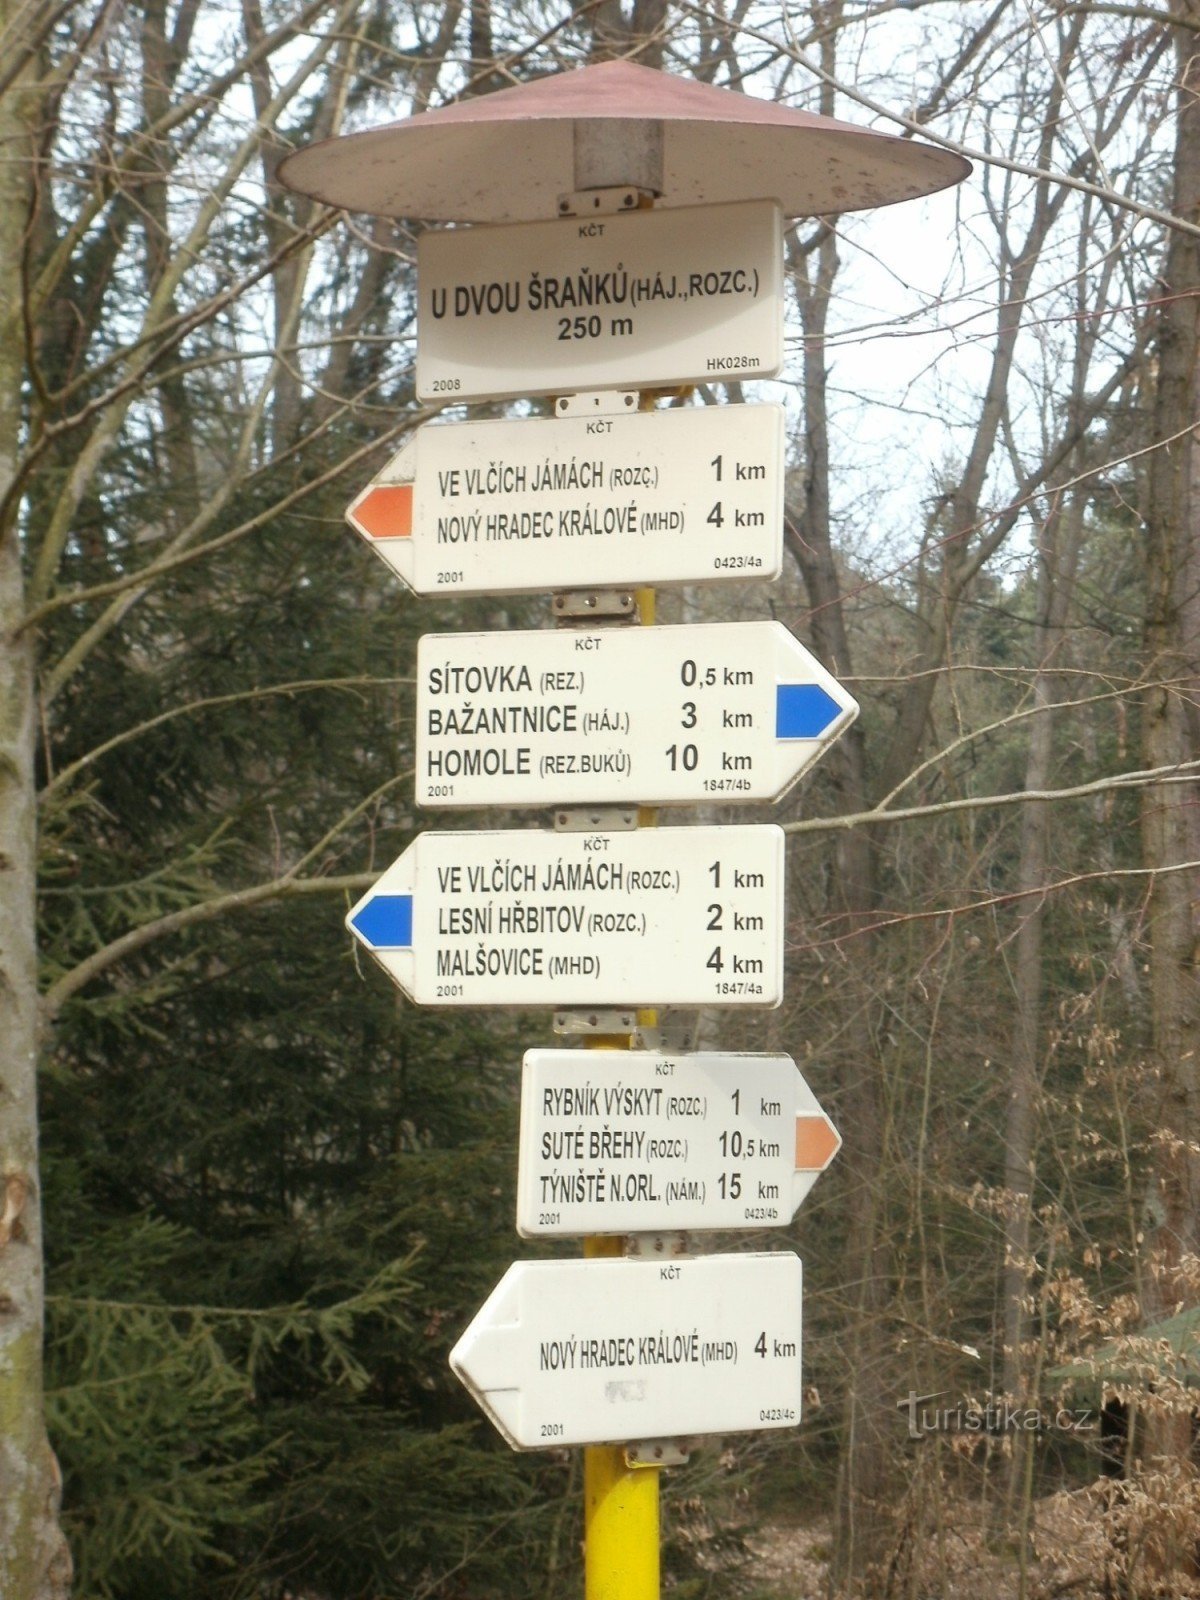 Touristenkreuzung U Dvou závor - Hradecké lesy